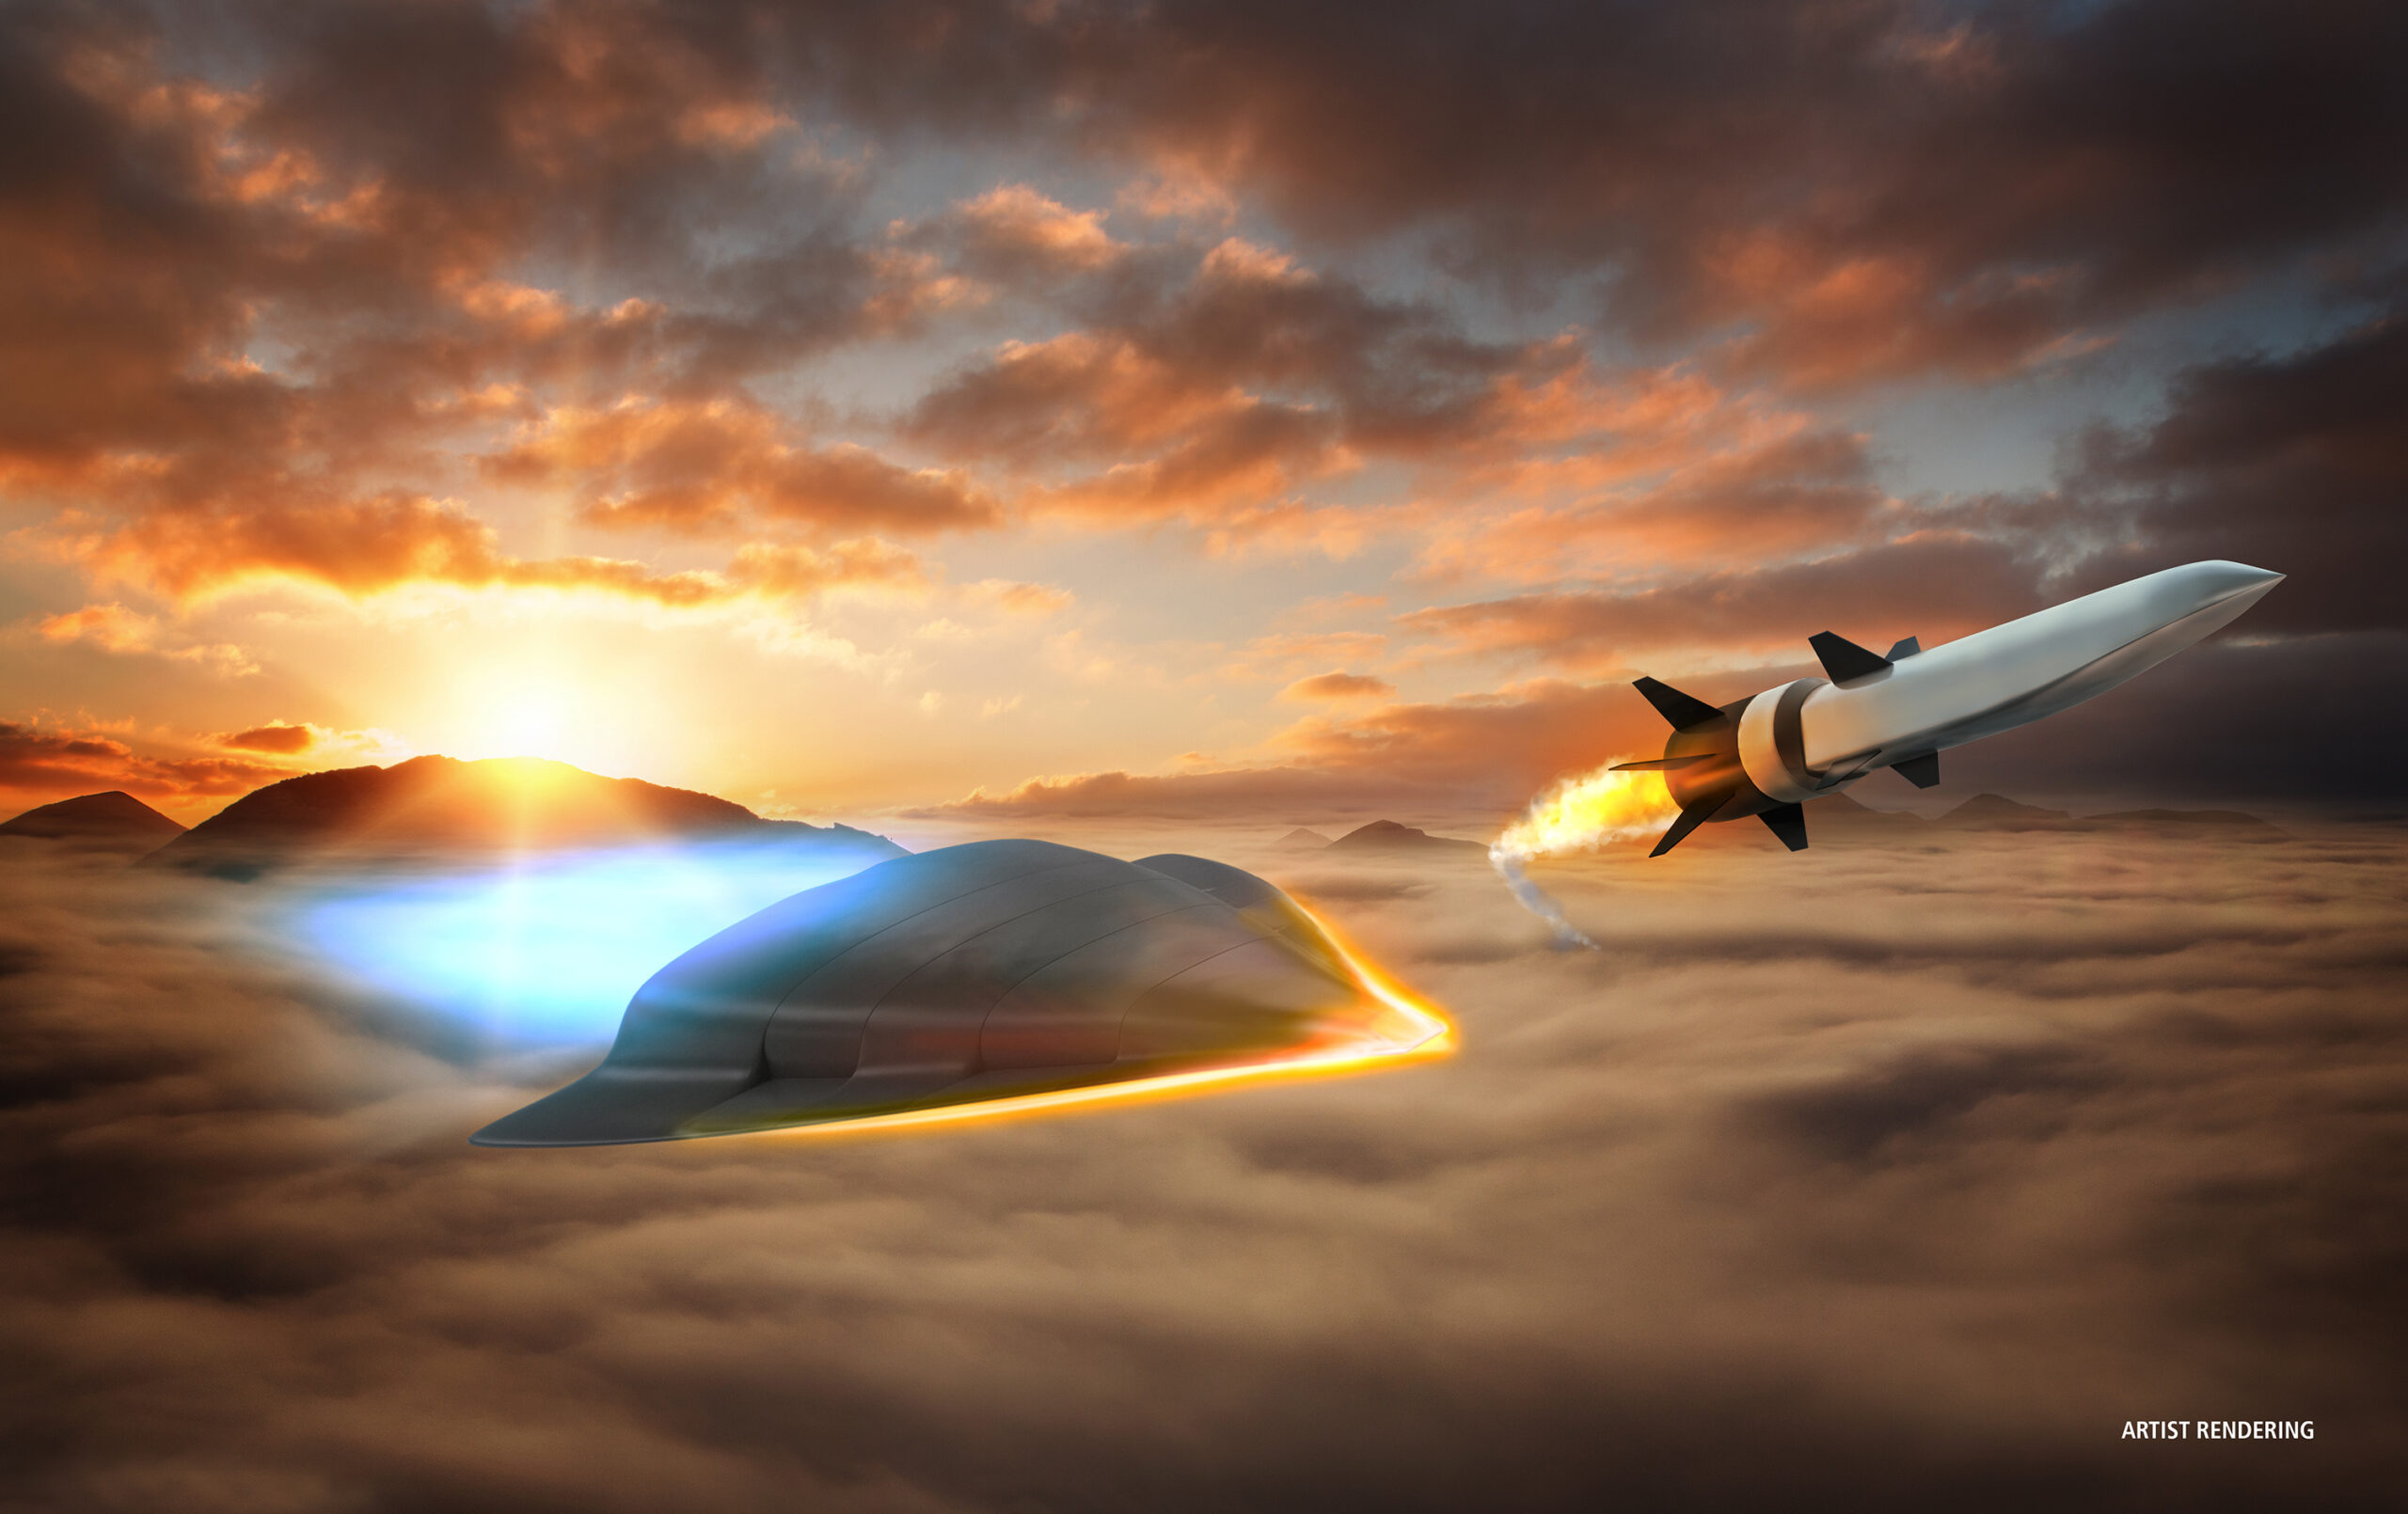 Raytheon challenges Lockheed Martin’s acquisition of Aerojet Rocketdyne